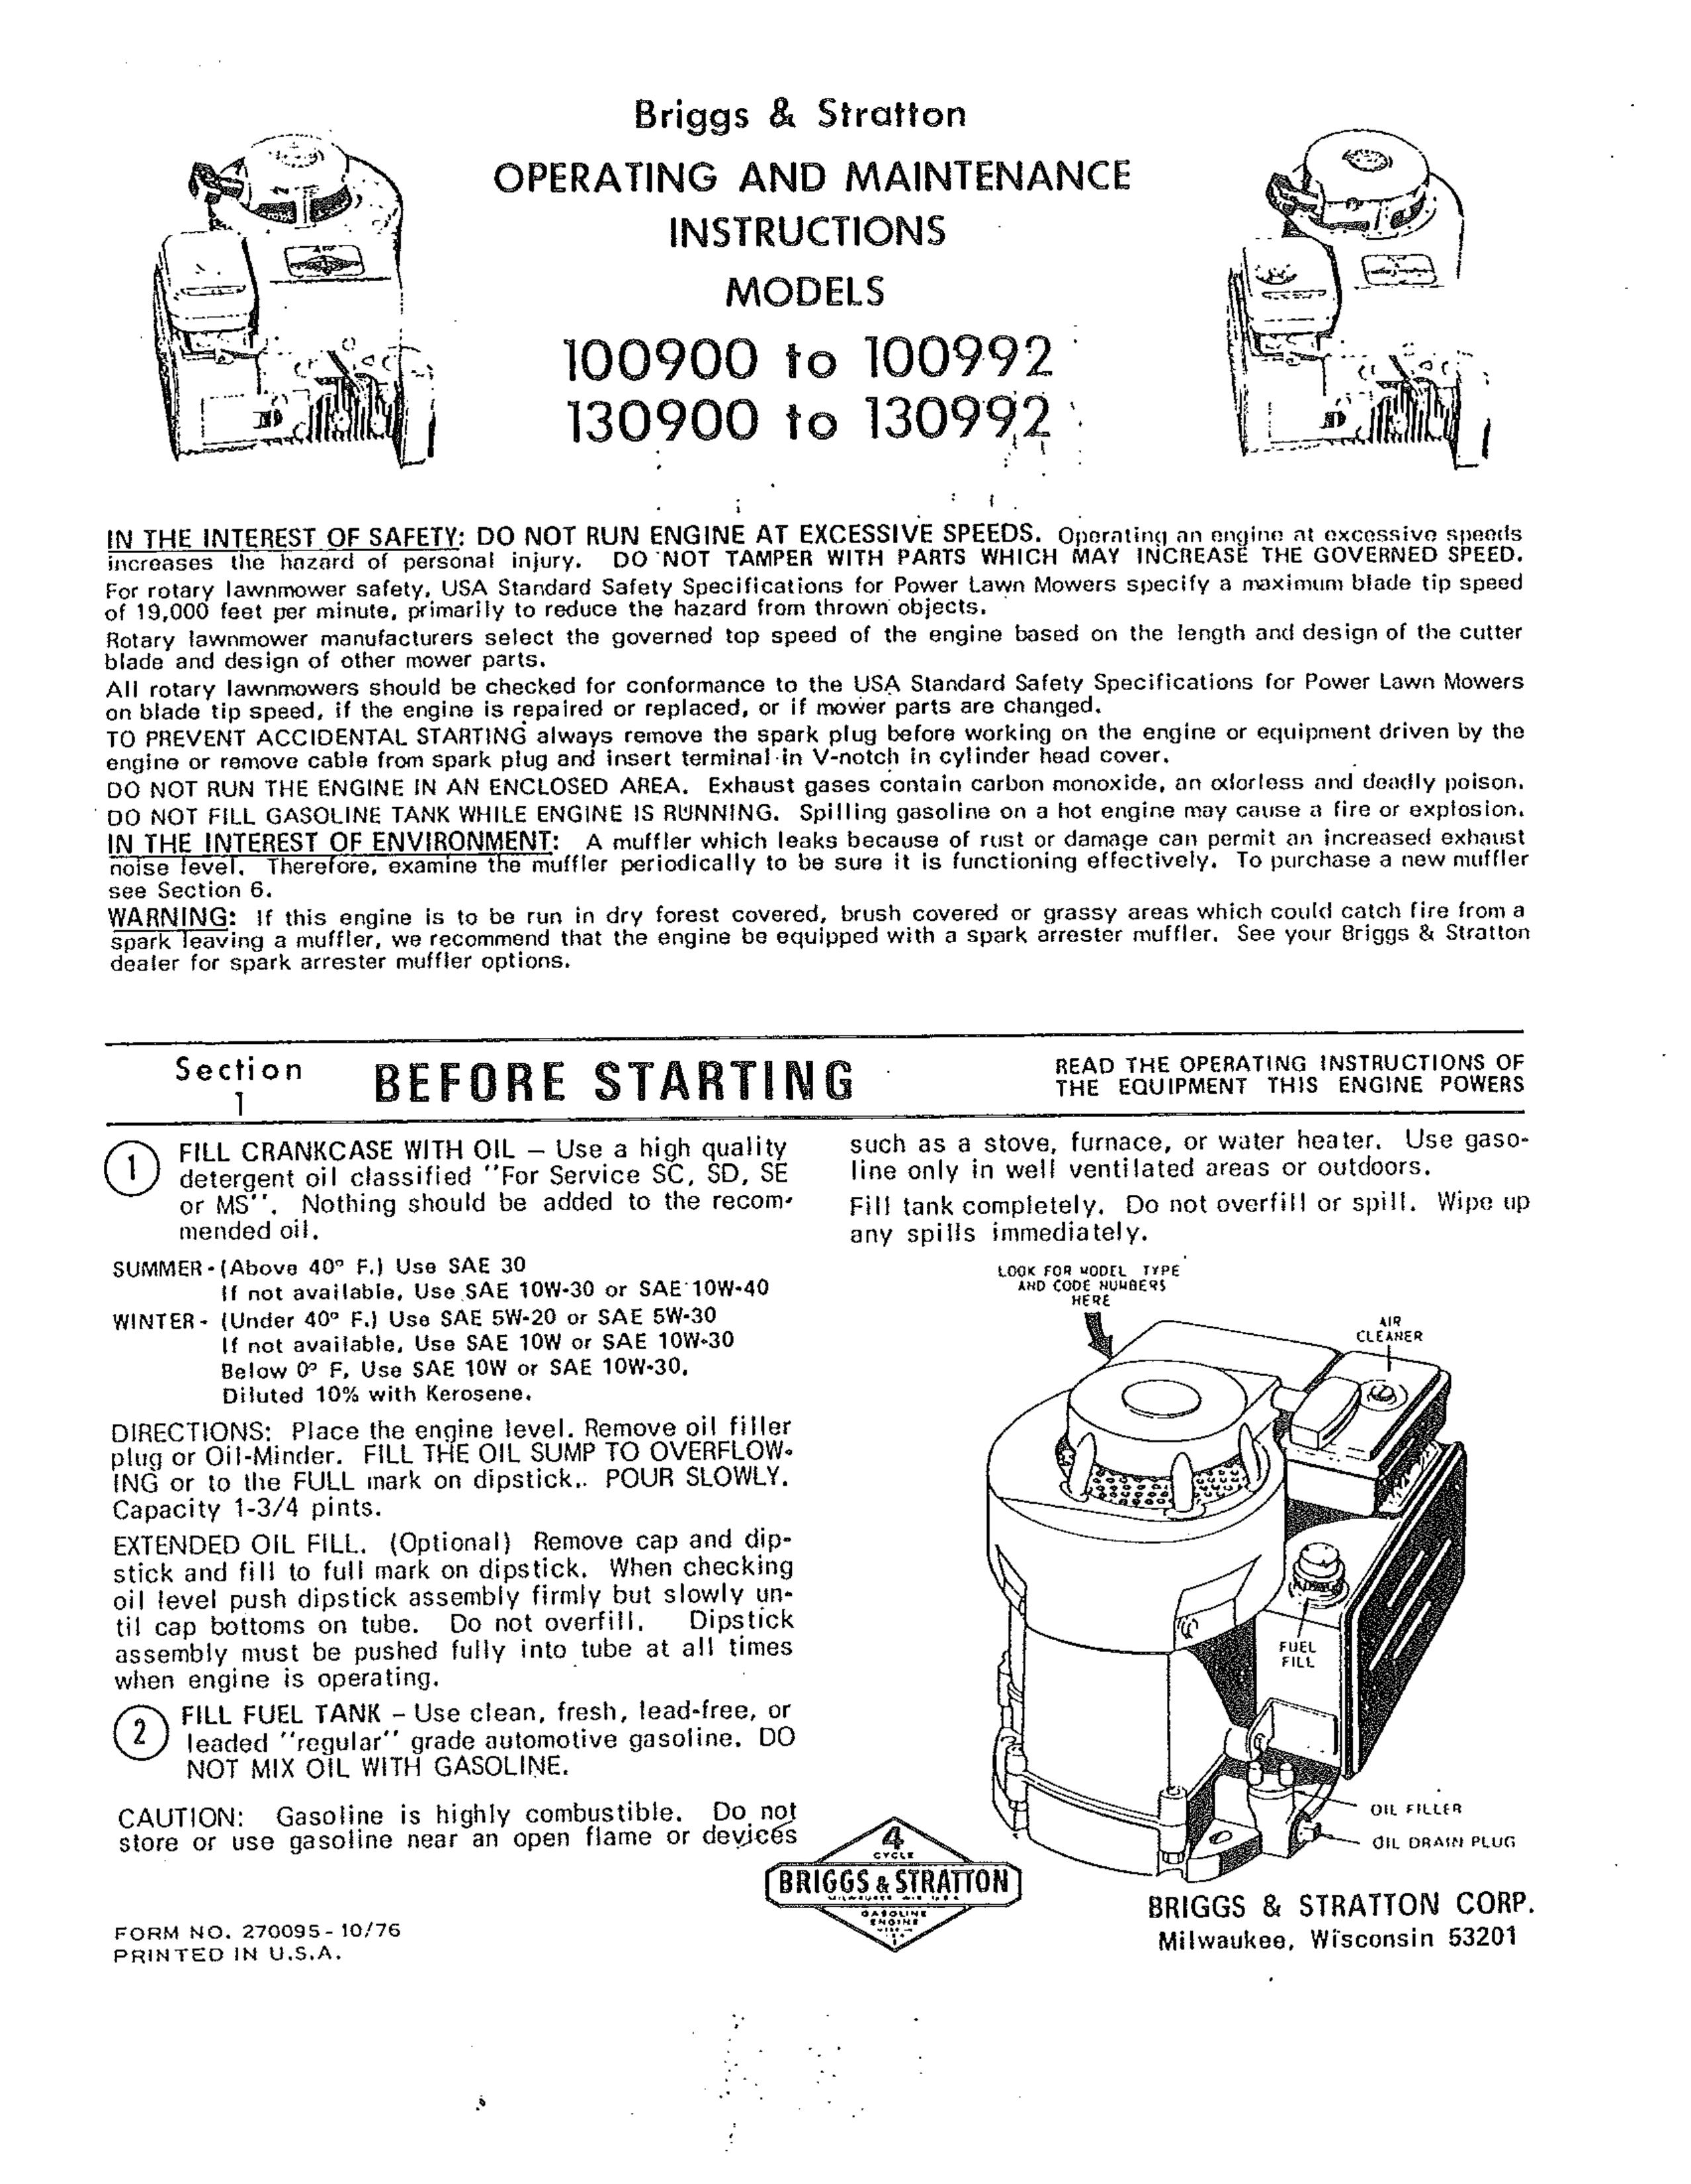 Briggs & Stratton 130900 to 130992 Lawn Mower User Manual